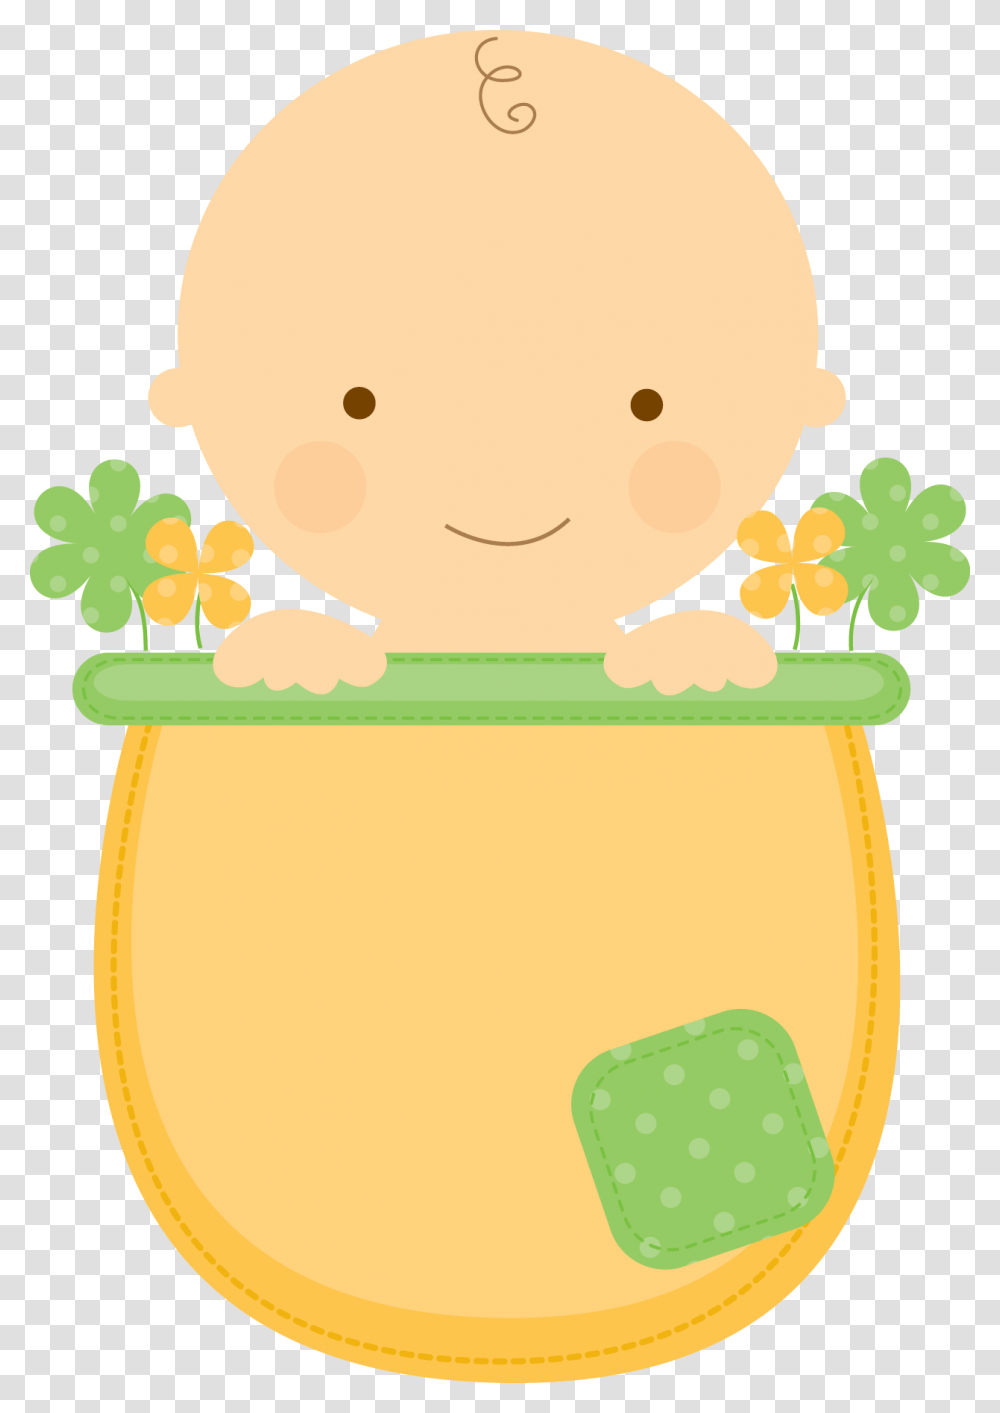 Flowerpot Babies Babyinflowerpot Boy Green Minus Baby Clothes Clipart, Birthday Cake, Dessert, Food, Rattle Transparent Png